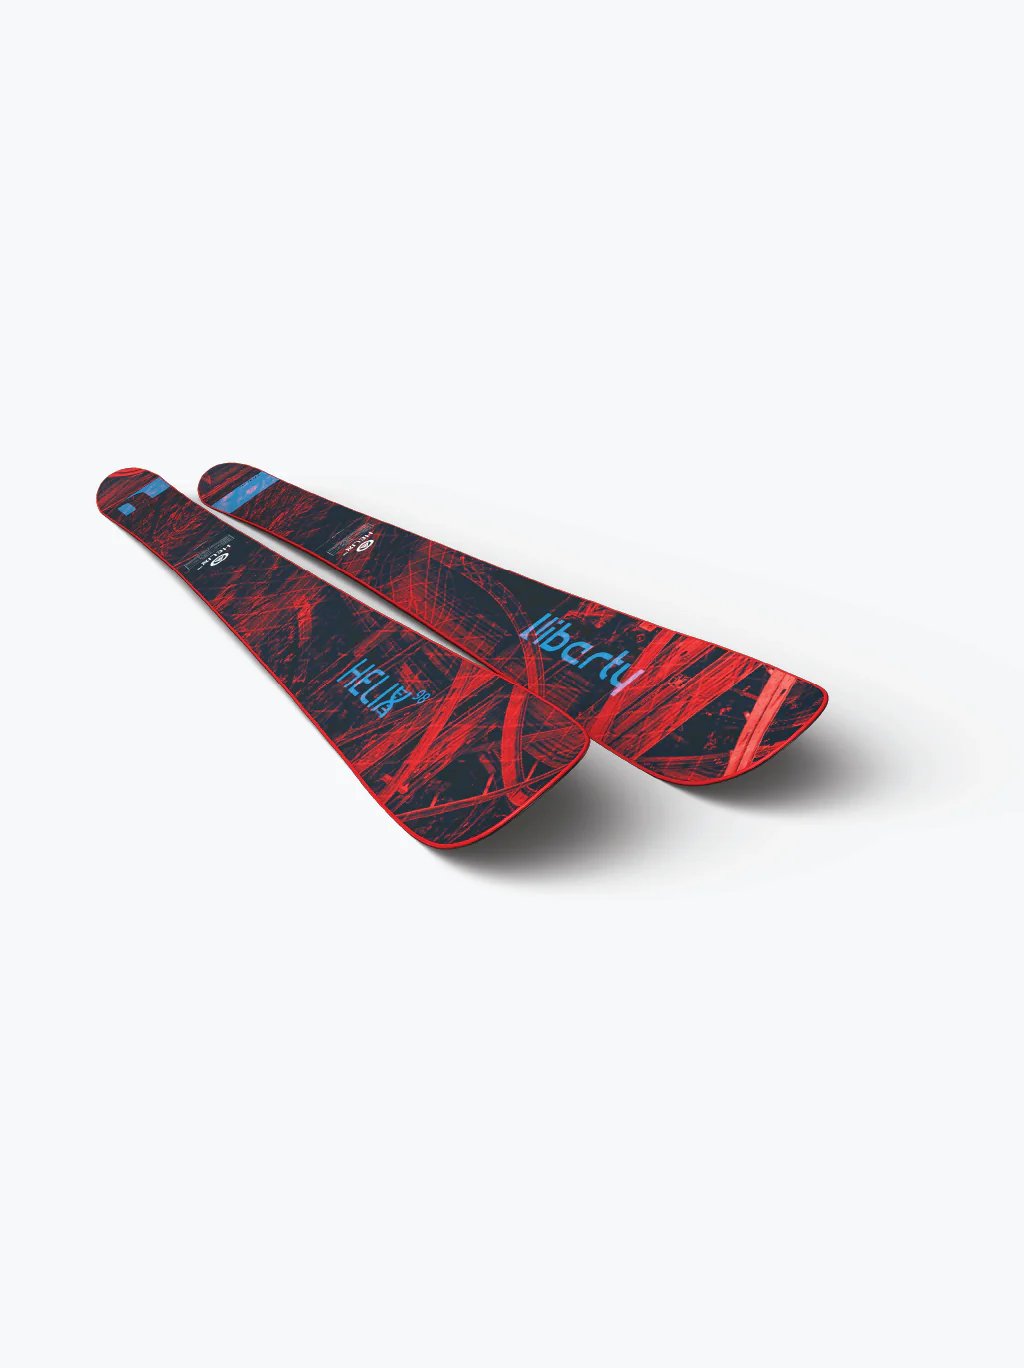 Liberty Helix 98 Skis 2024 - FULLSEND SKI AND OUTDOOR